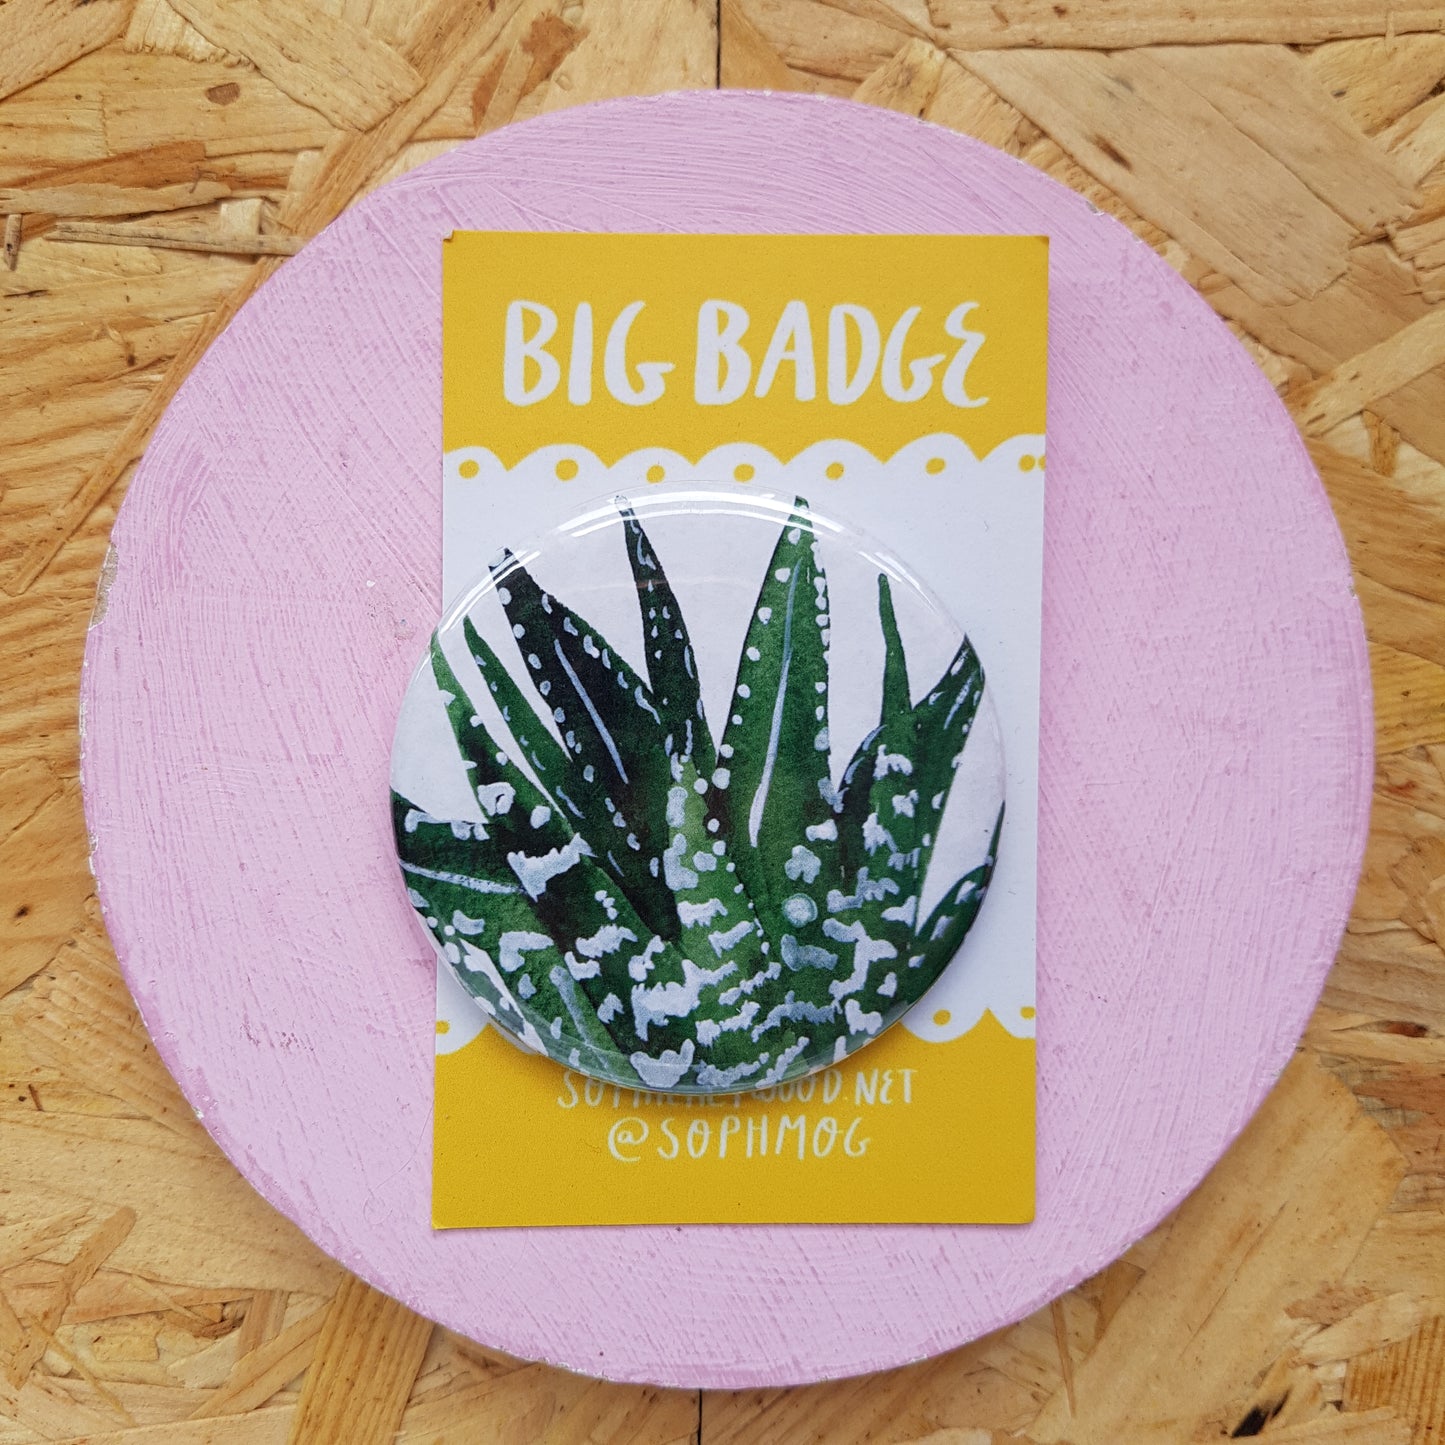 Plant Themed Big Badges